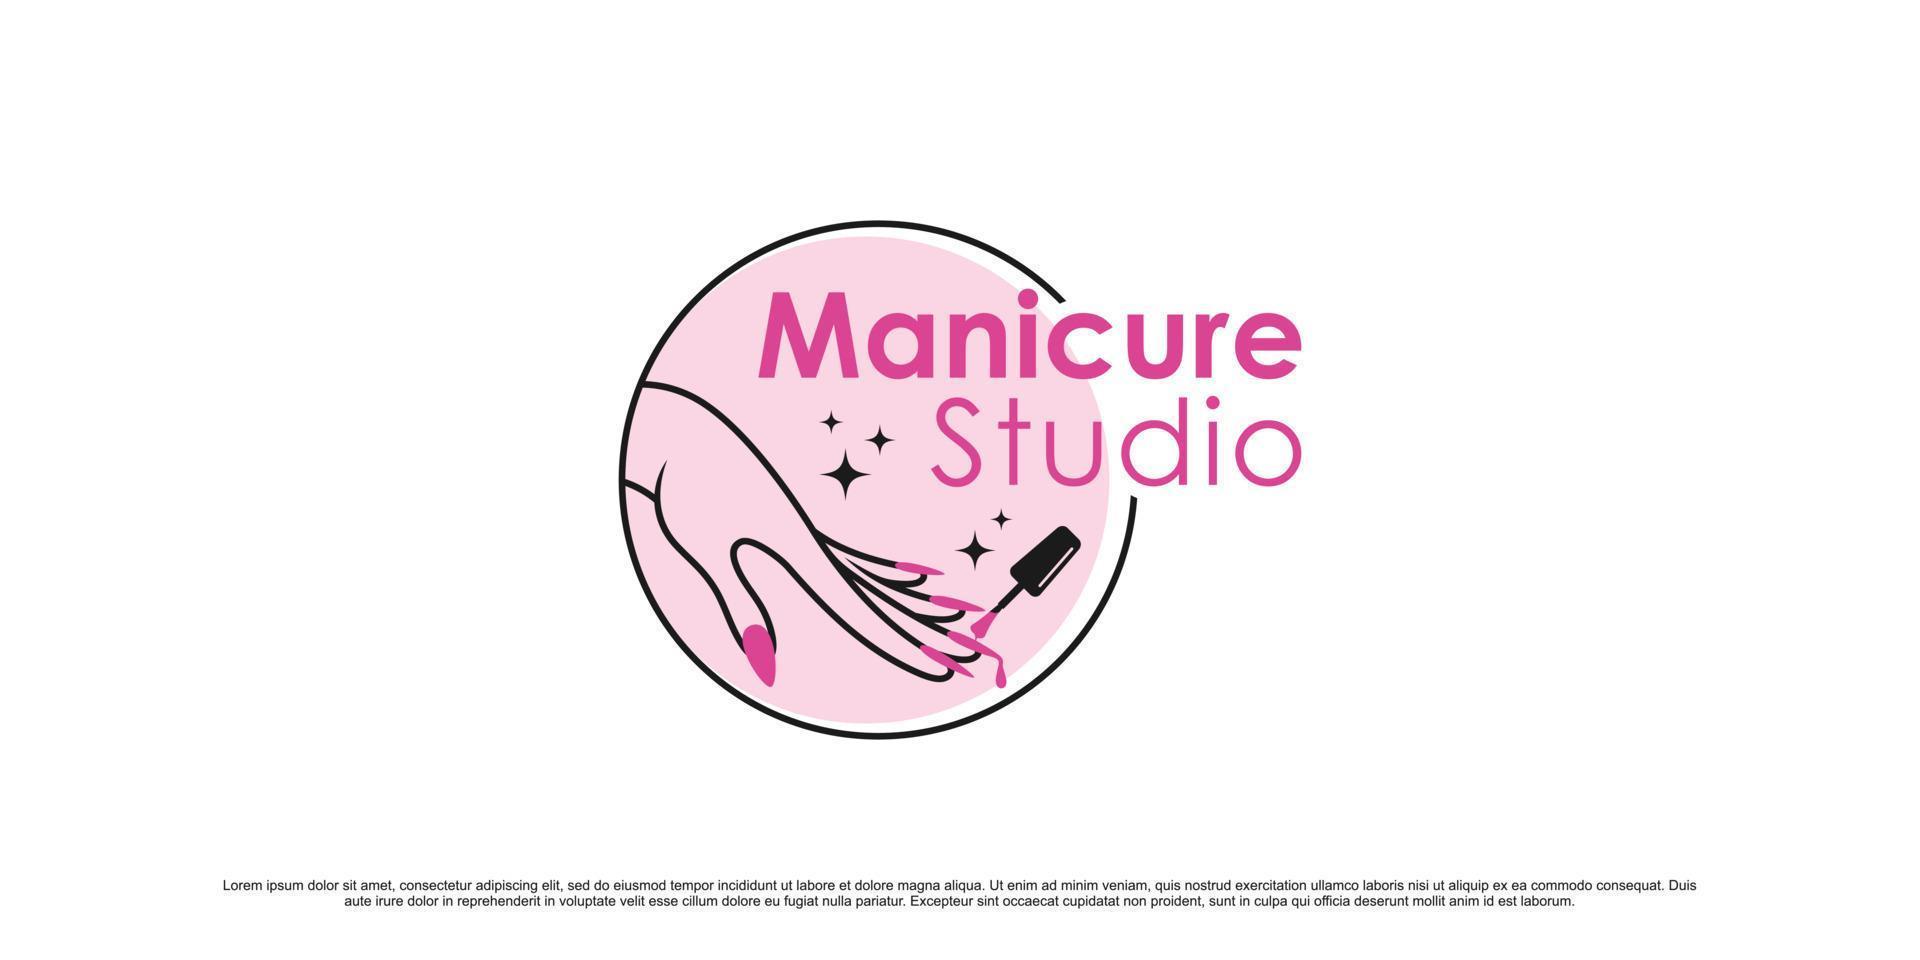 Nail polish logo design for manicure studio or nail salon with creative element Premium Vector